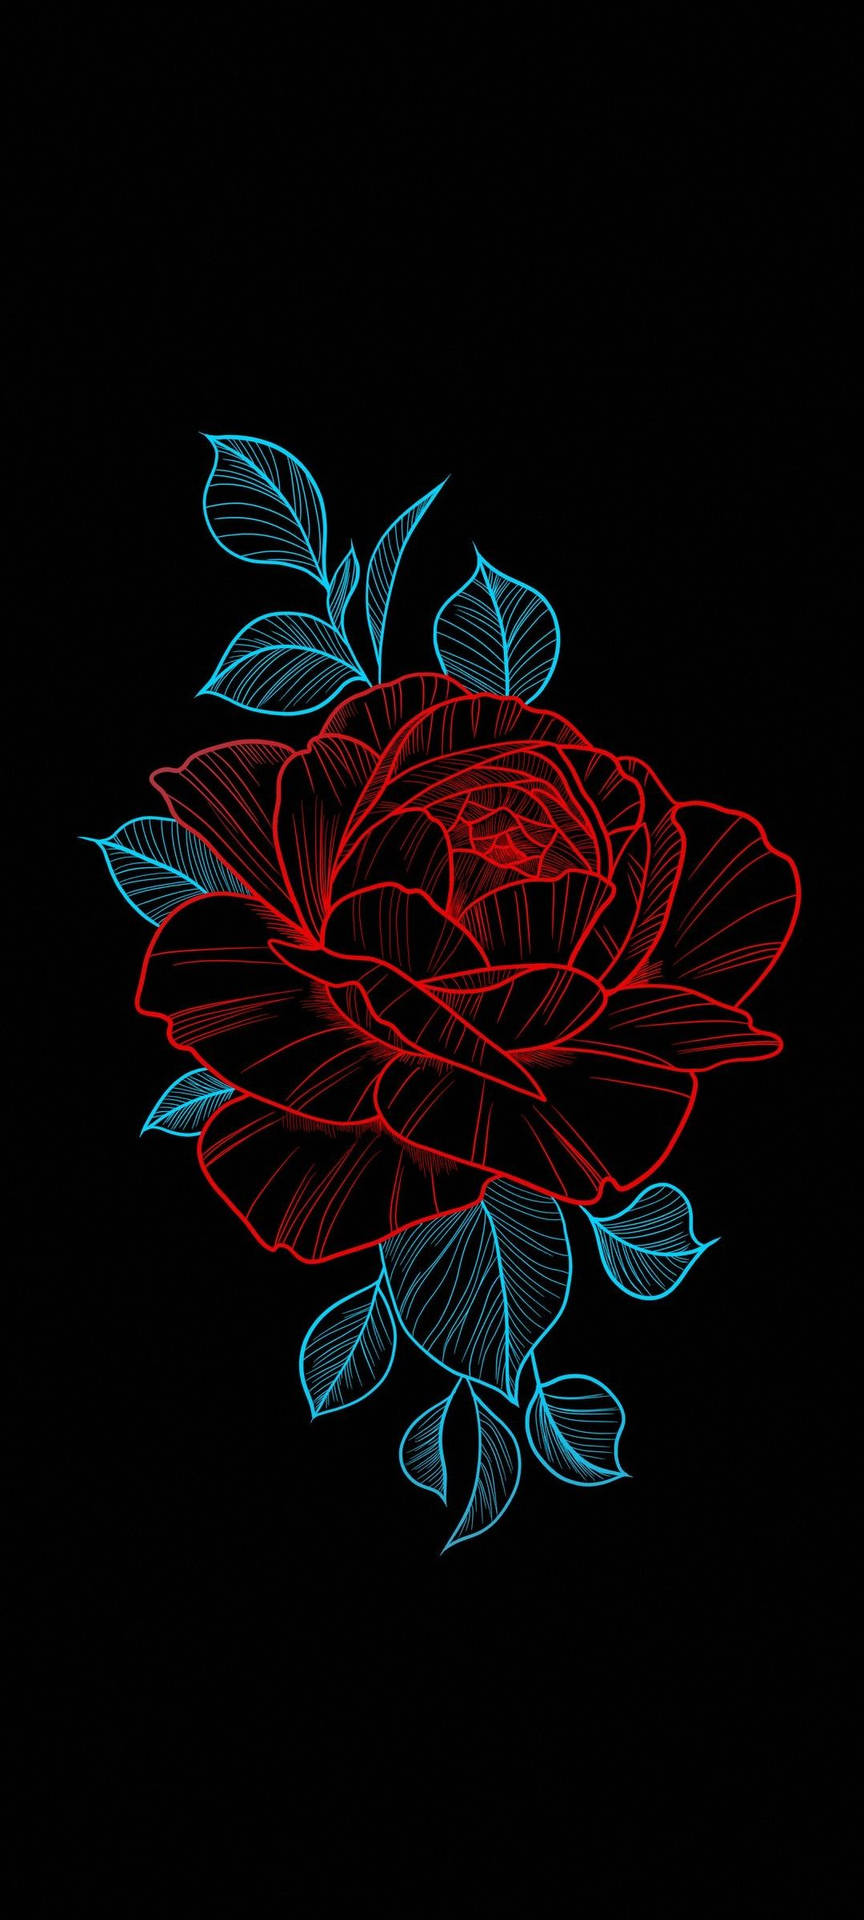 Neon Rose by kathytran16 on DeviantArt